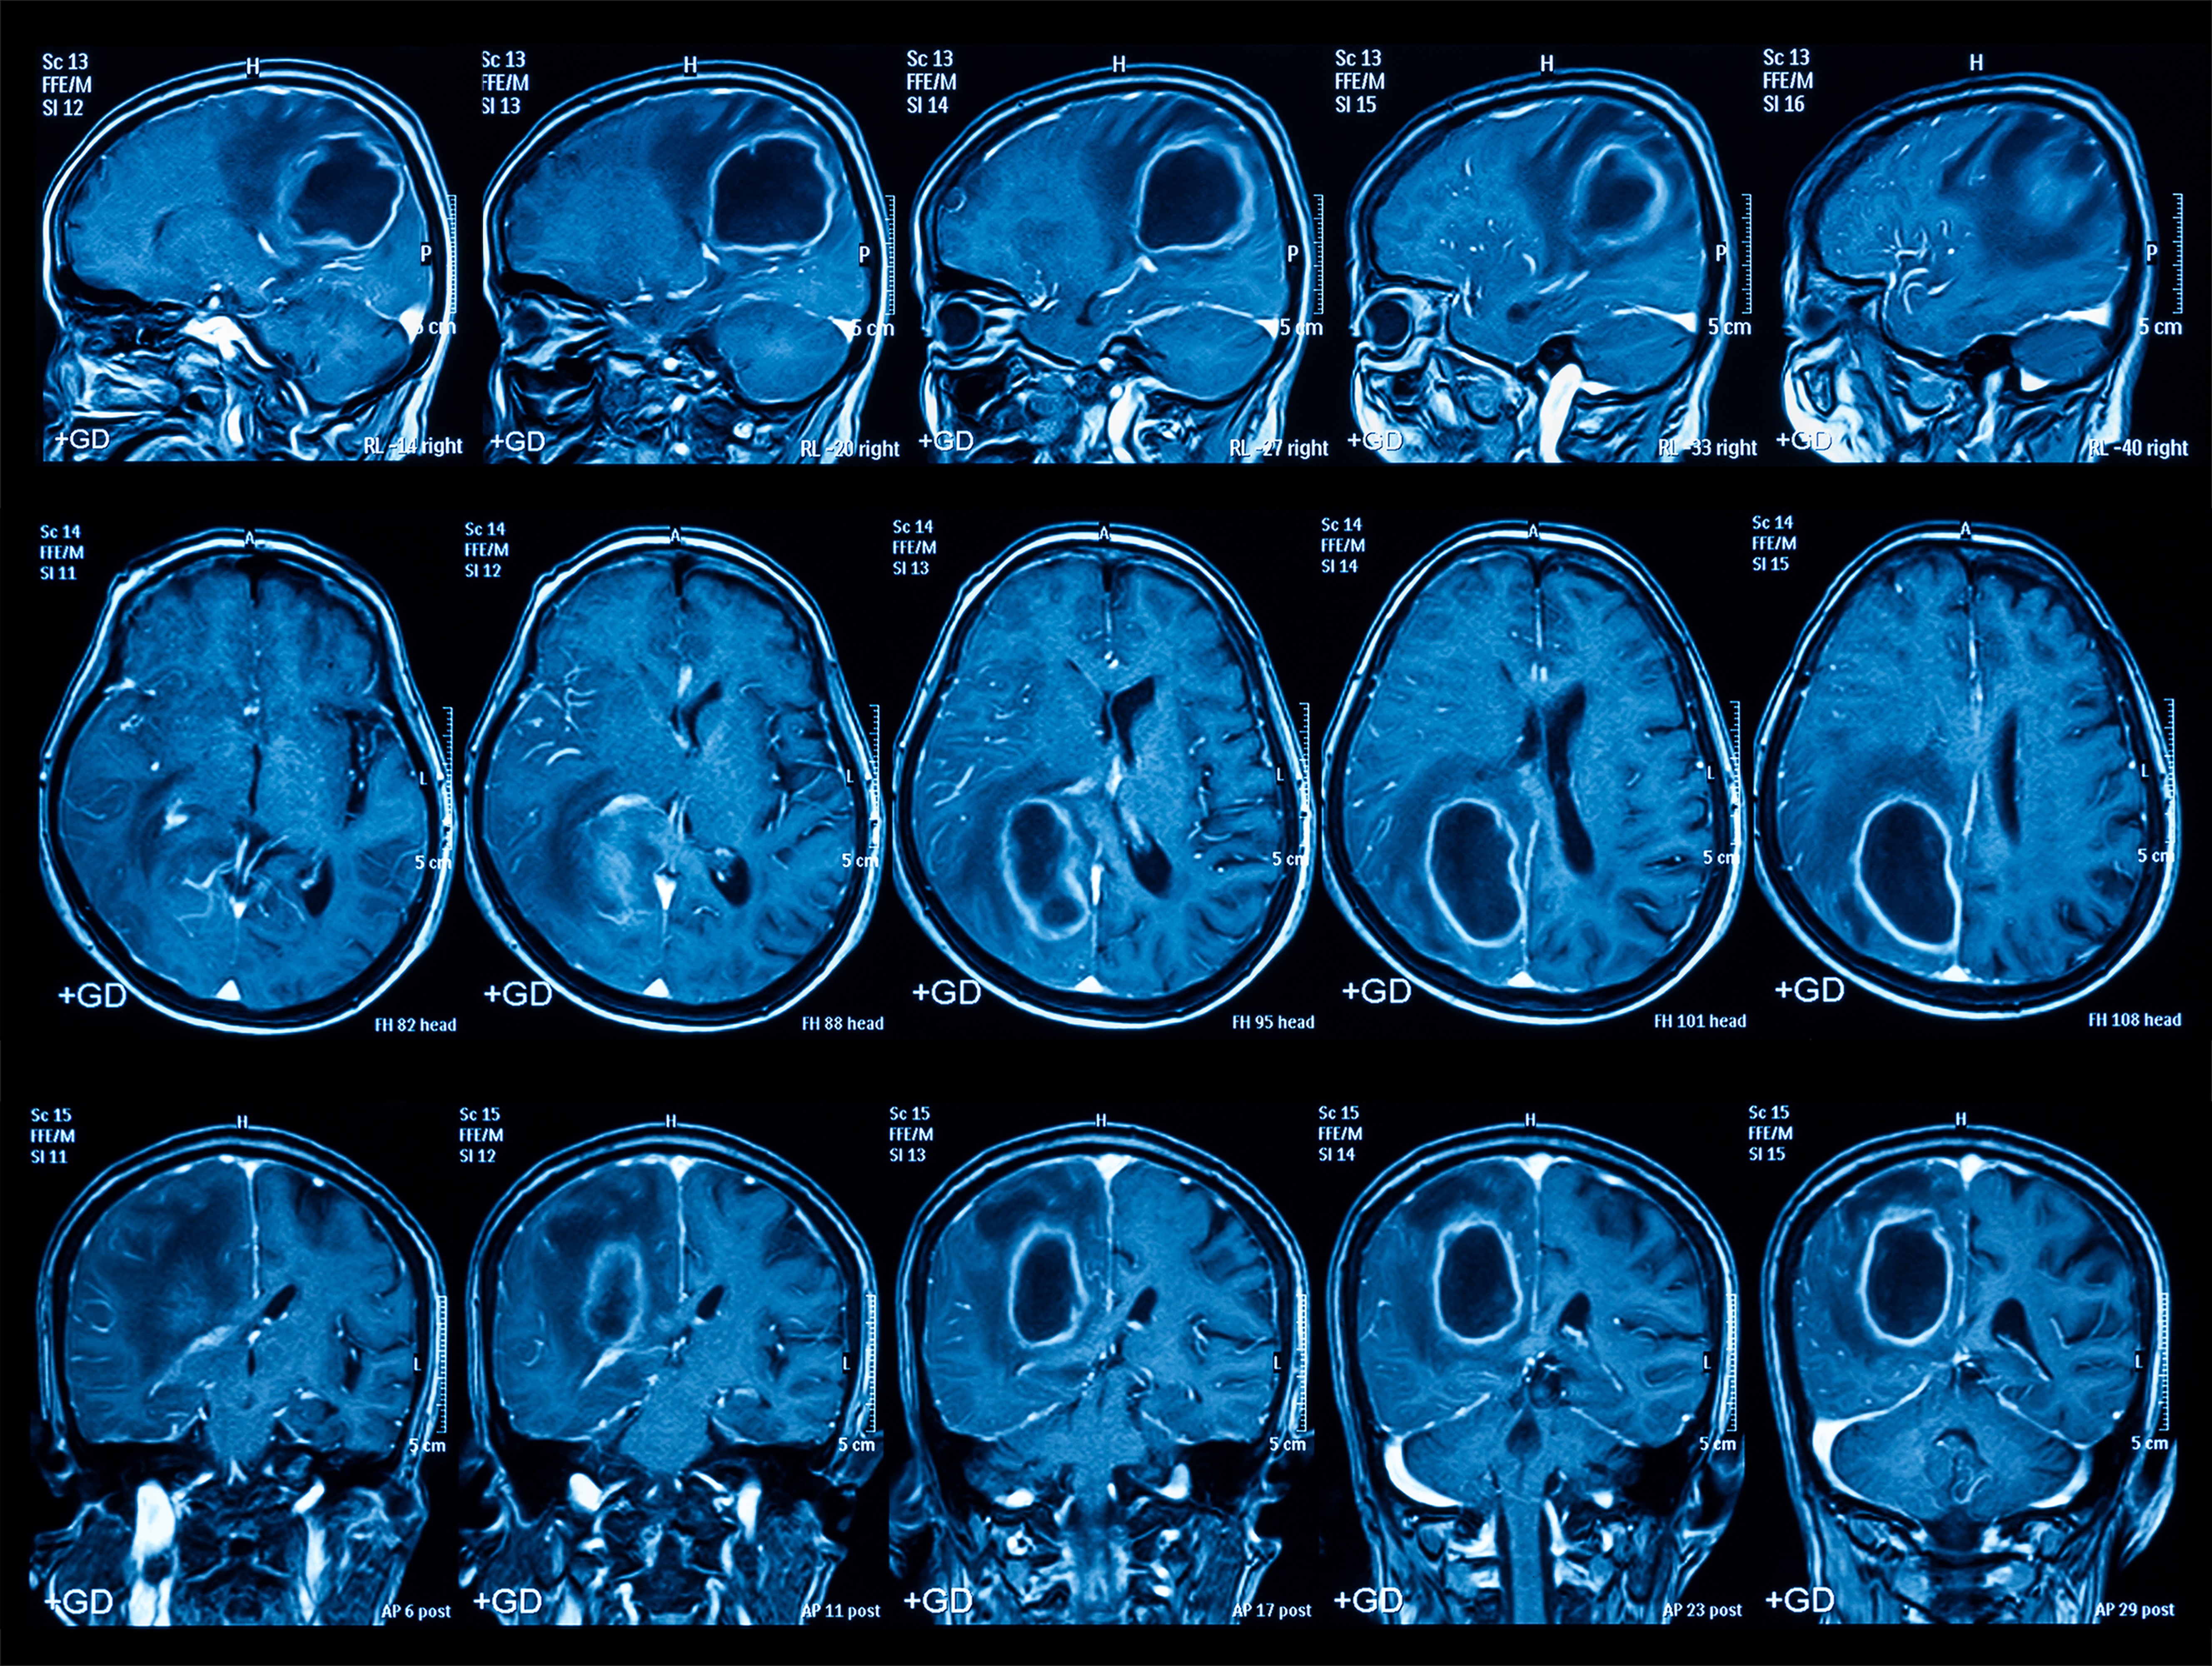 Мрт головного мозга санкт петербург. Опухоль головного мозга снимок мрт. Опухоли головного мозга MRT. Кт томограмма головного мозга. Снимки мрт головного мозга с опухолью.